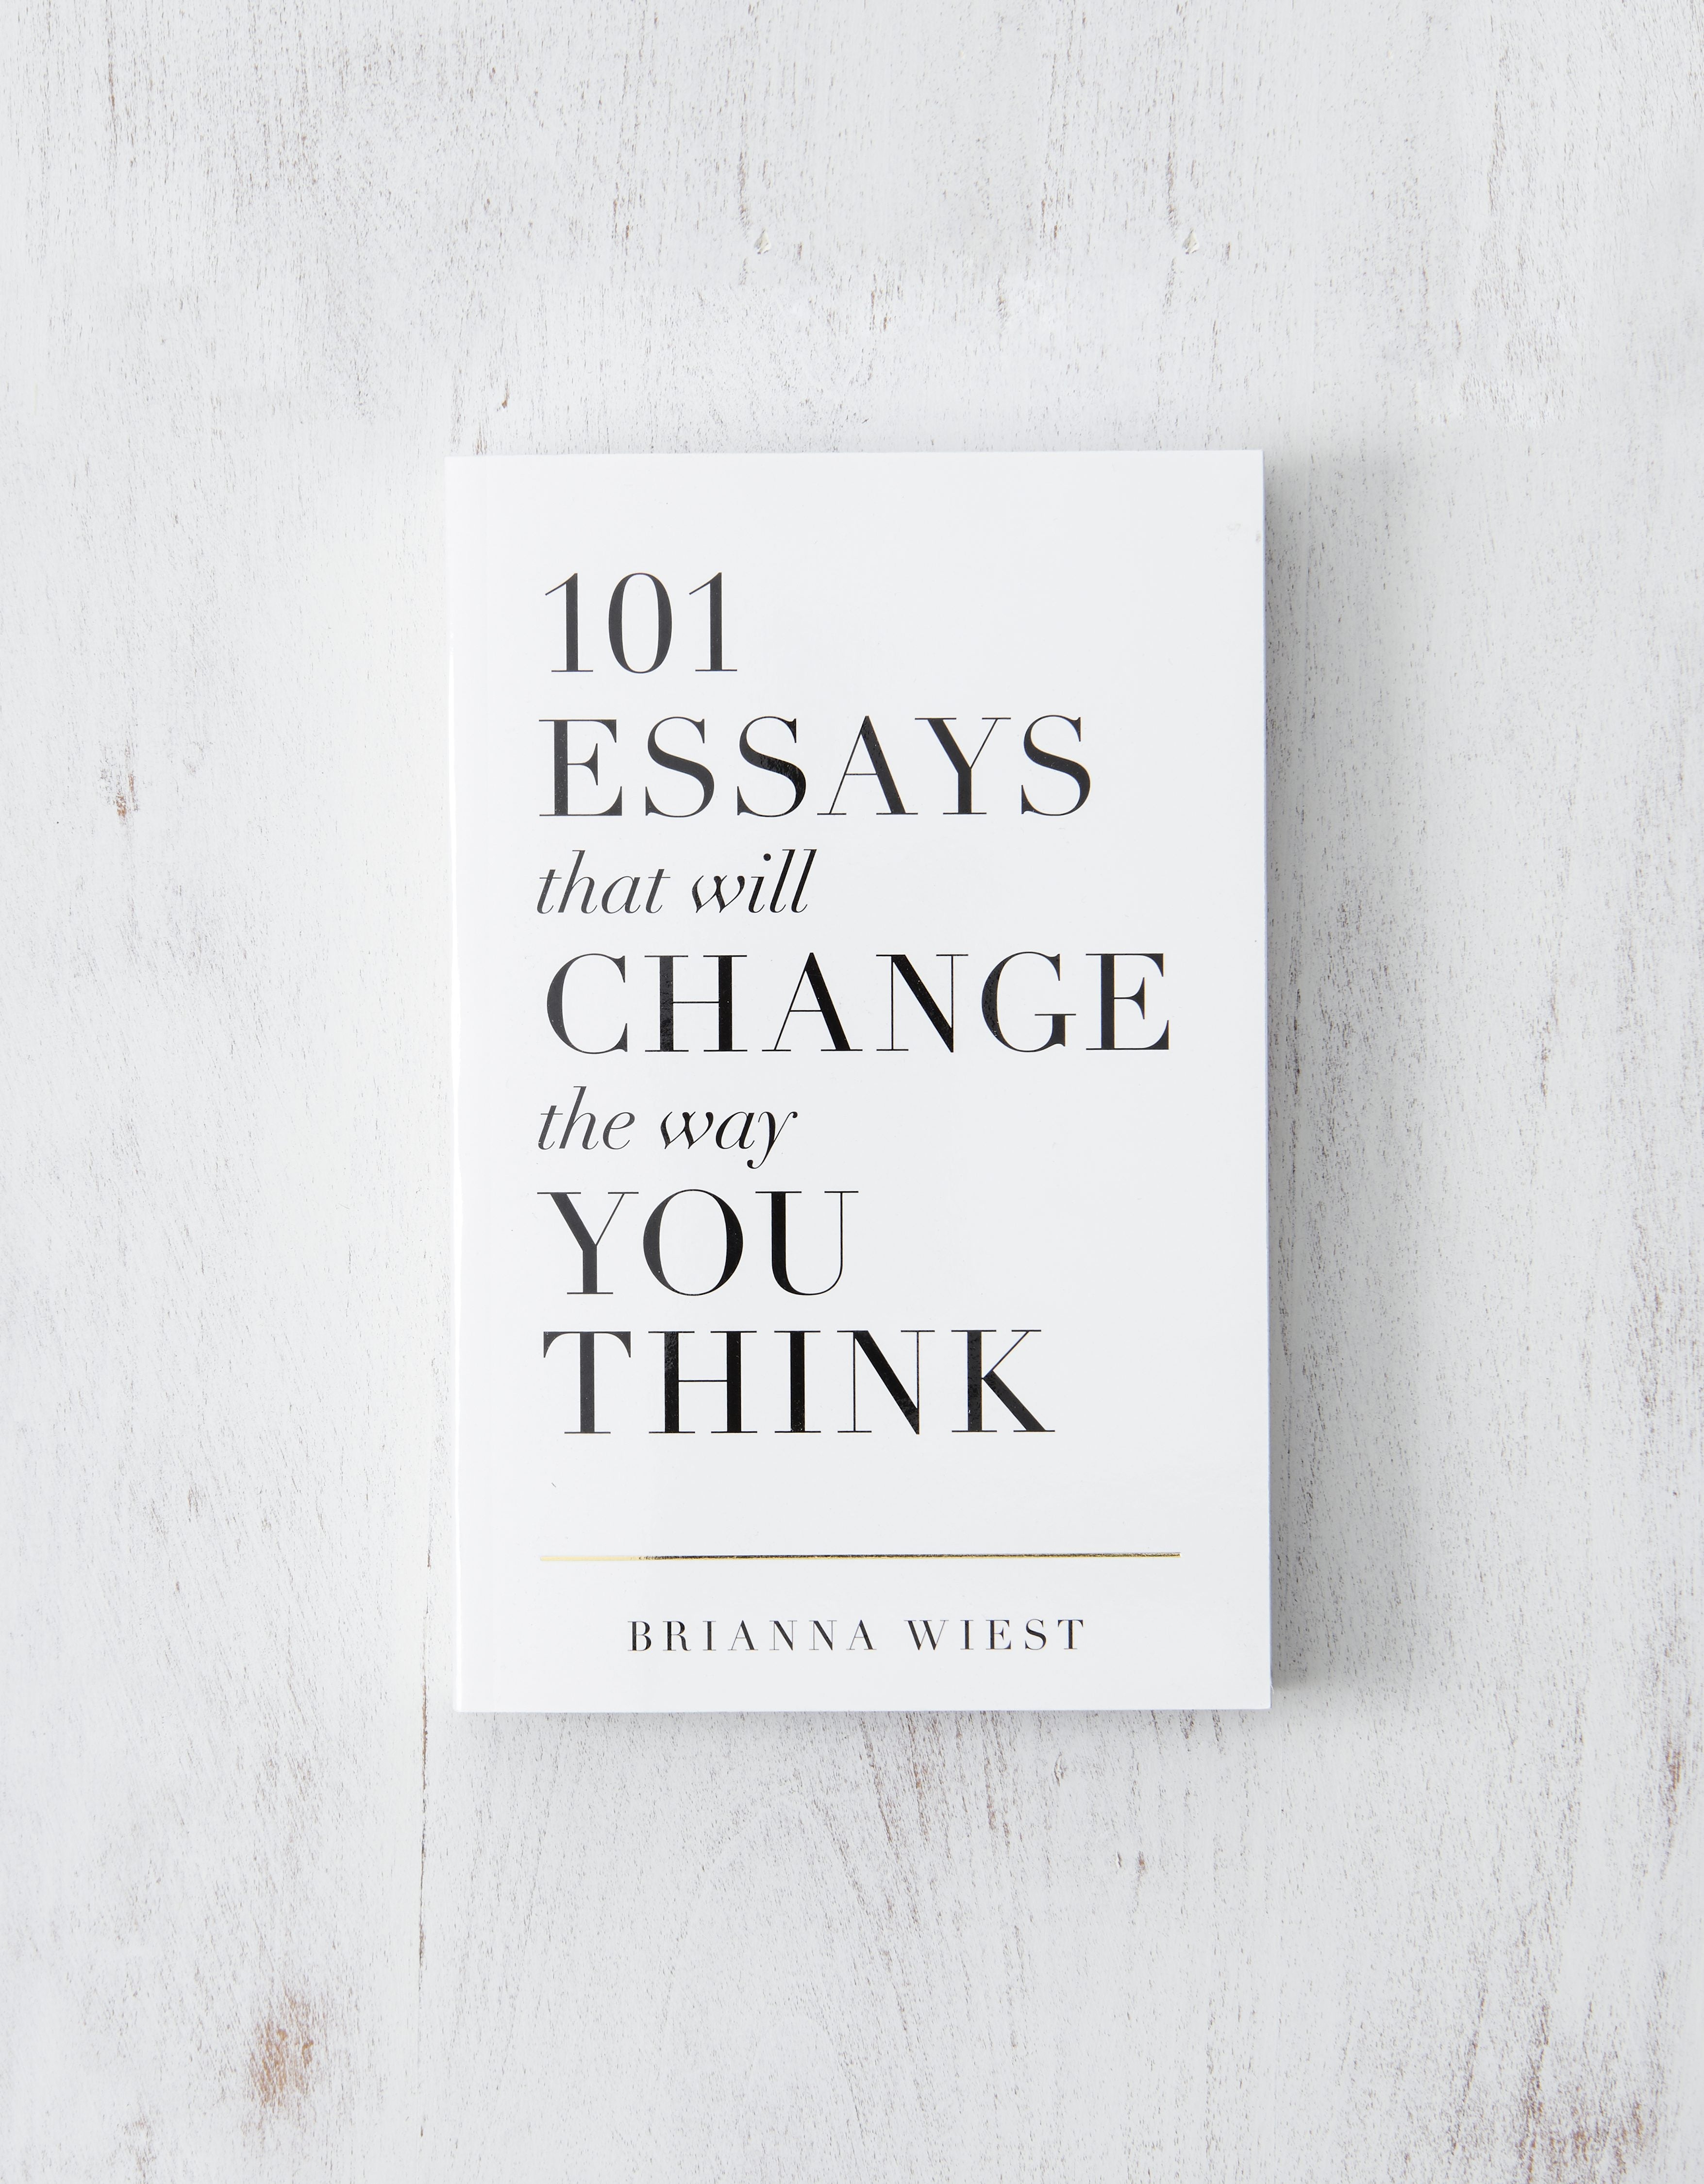 100 essays